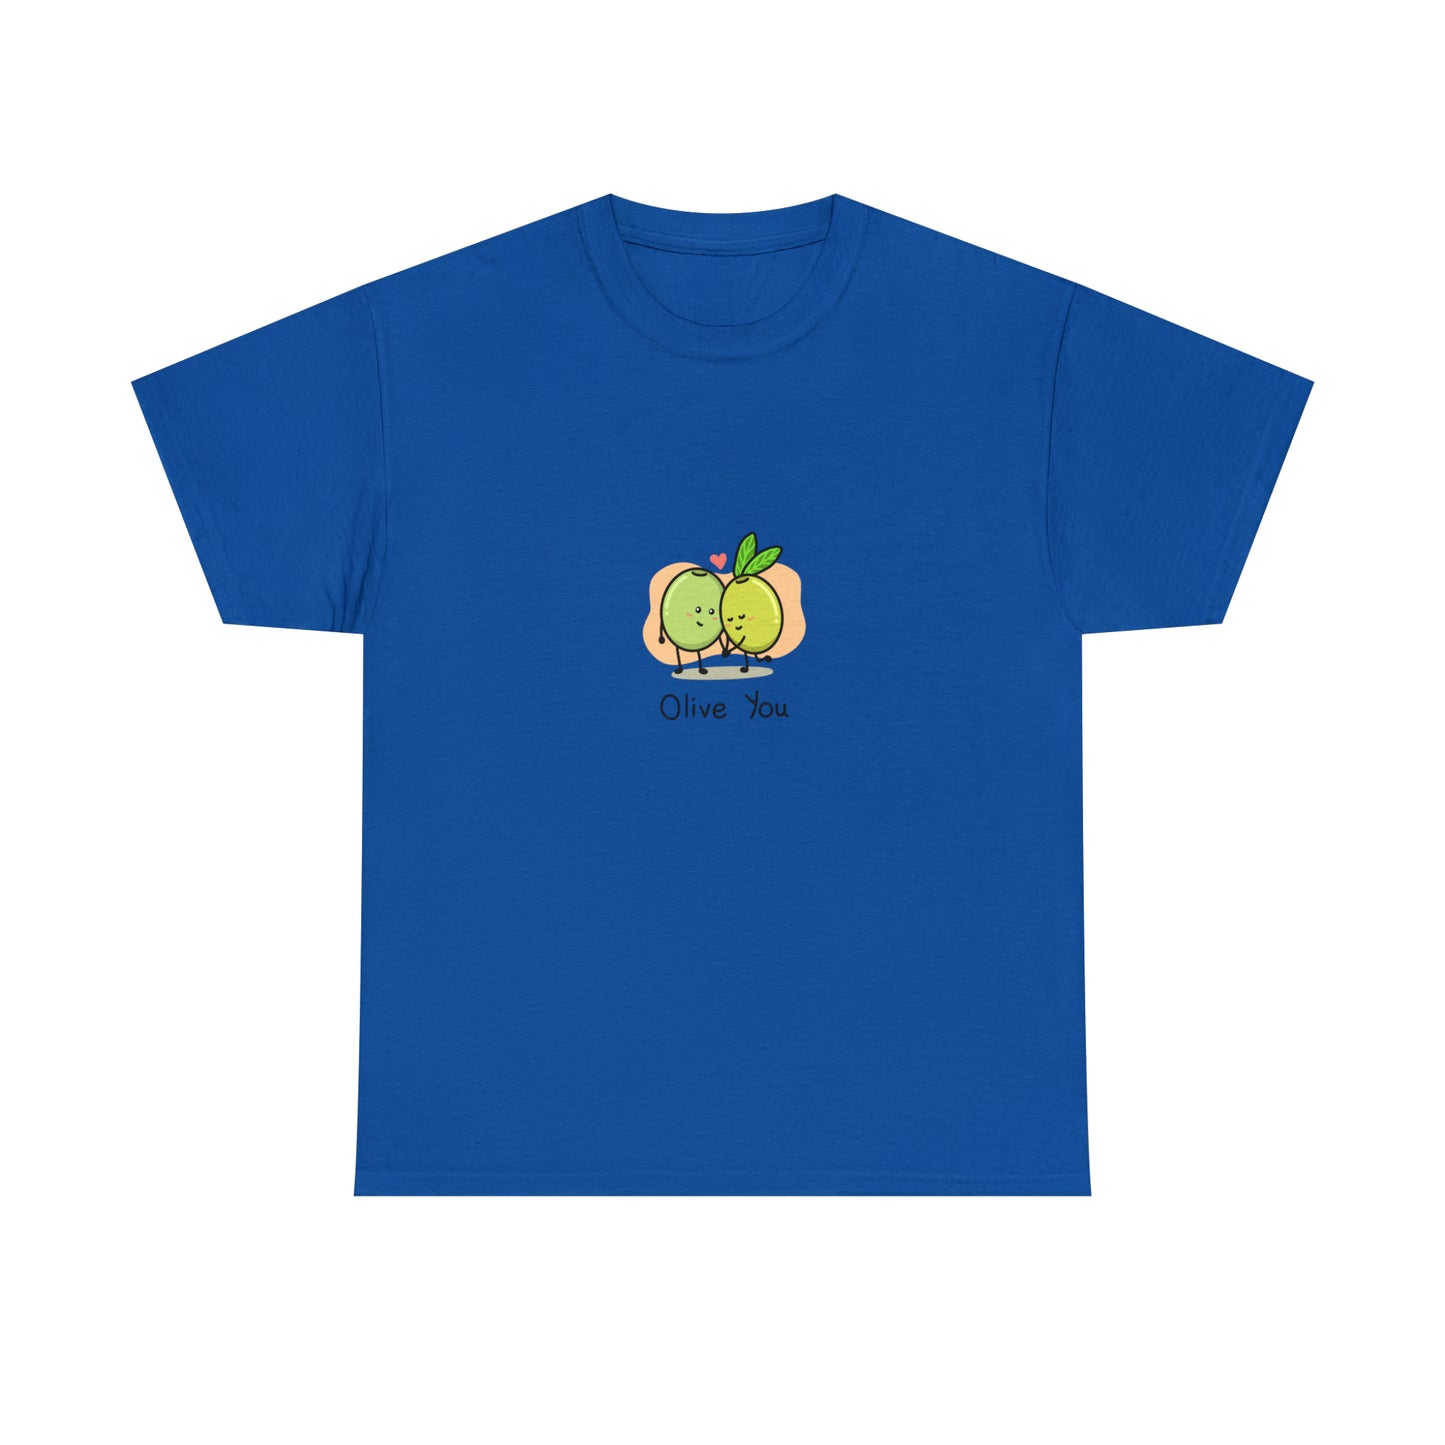 Custom Parody T-shirt, Olive you design